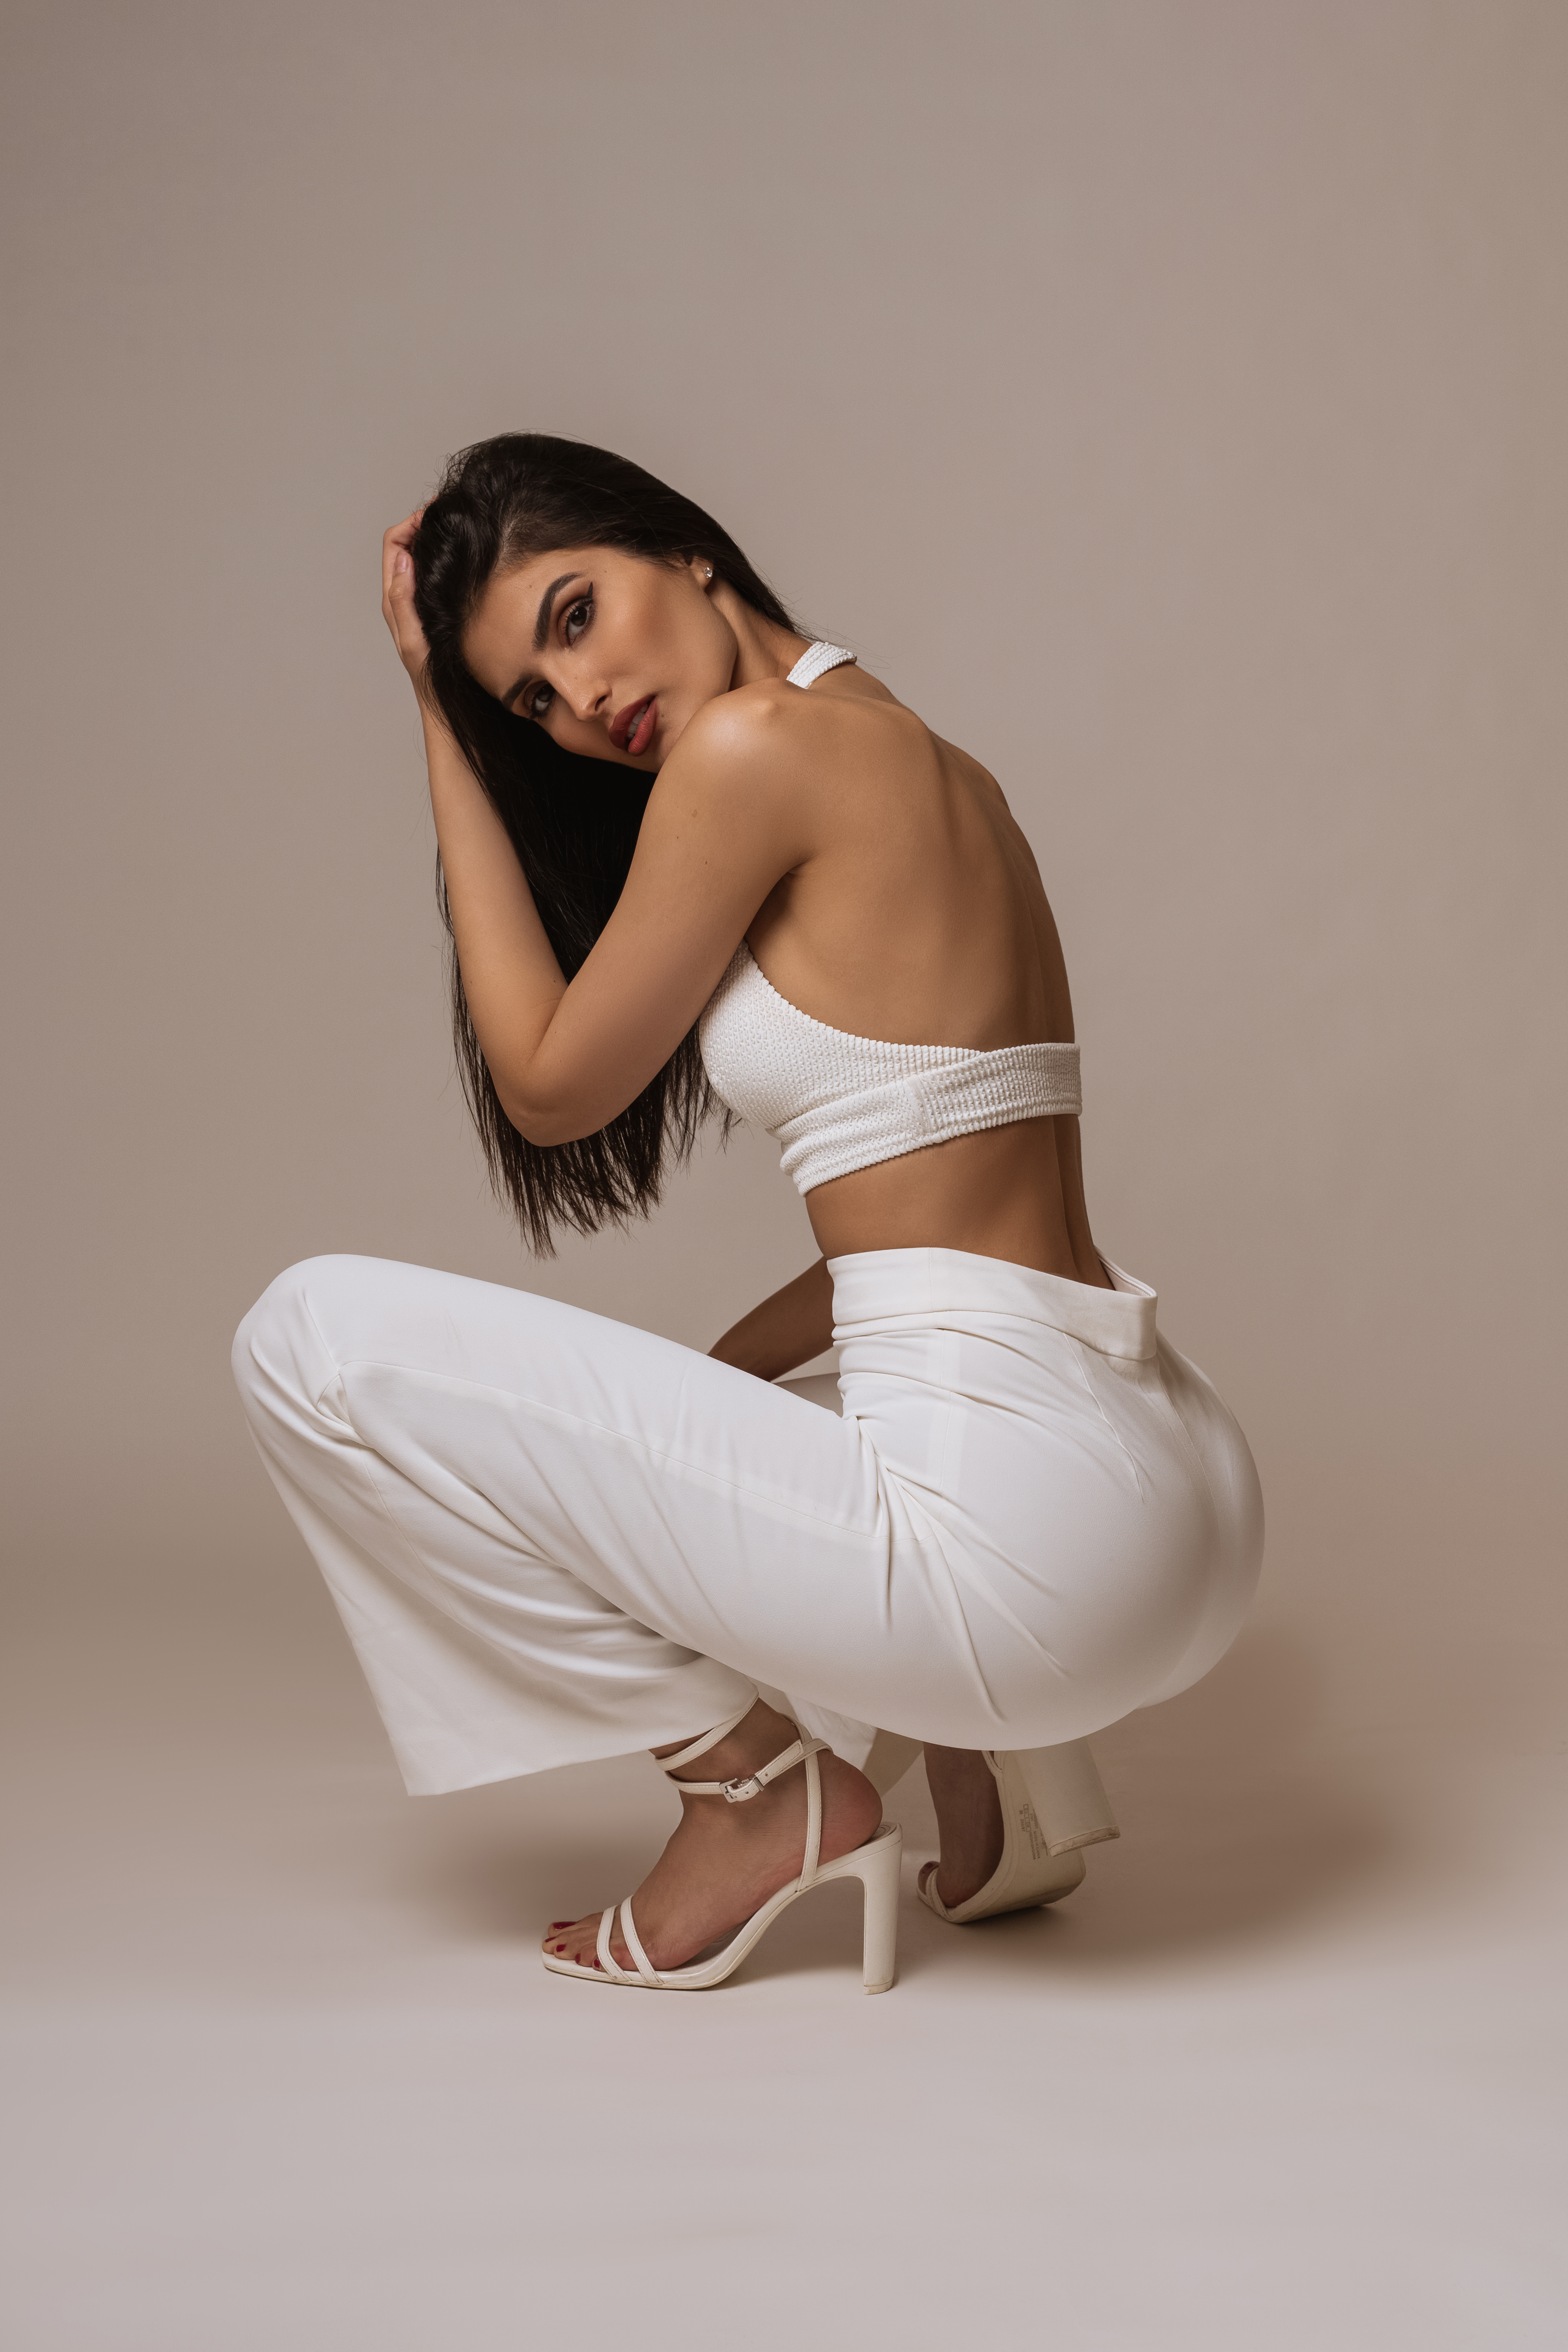 Model Israeli Model Simple Background Portrait Display Women Brunette White Clothing High Heels Stud 4000x6000